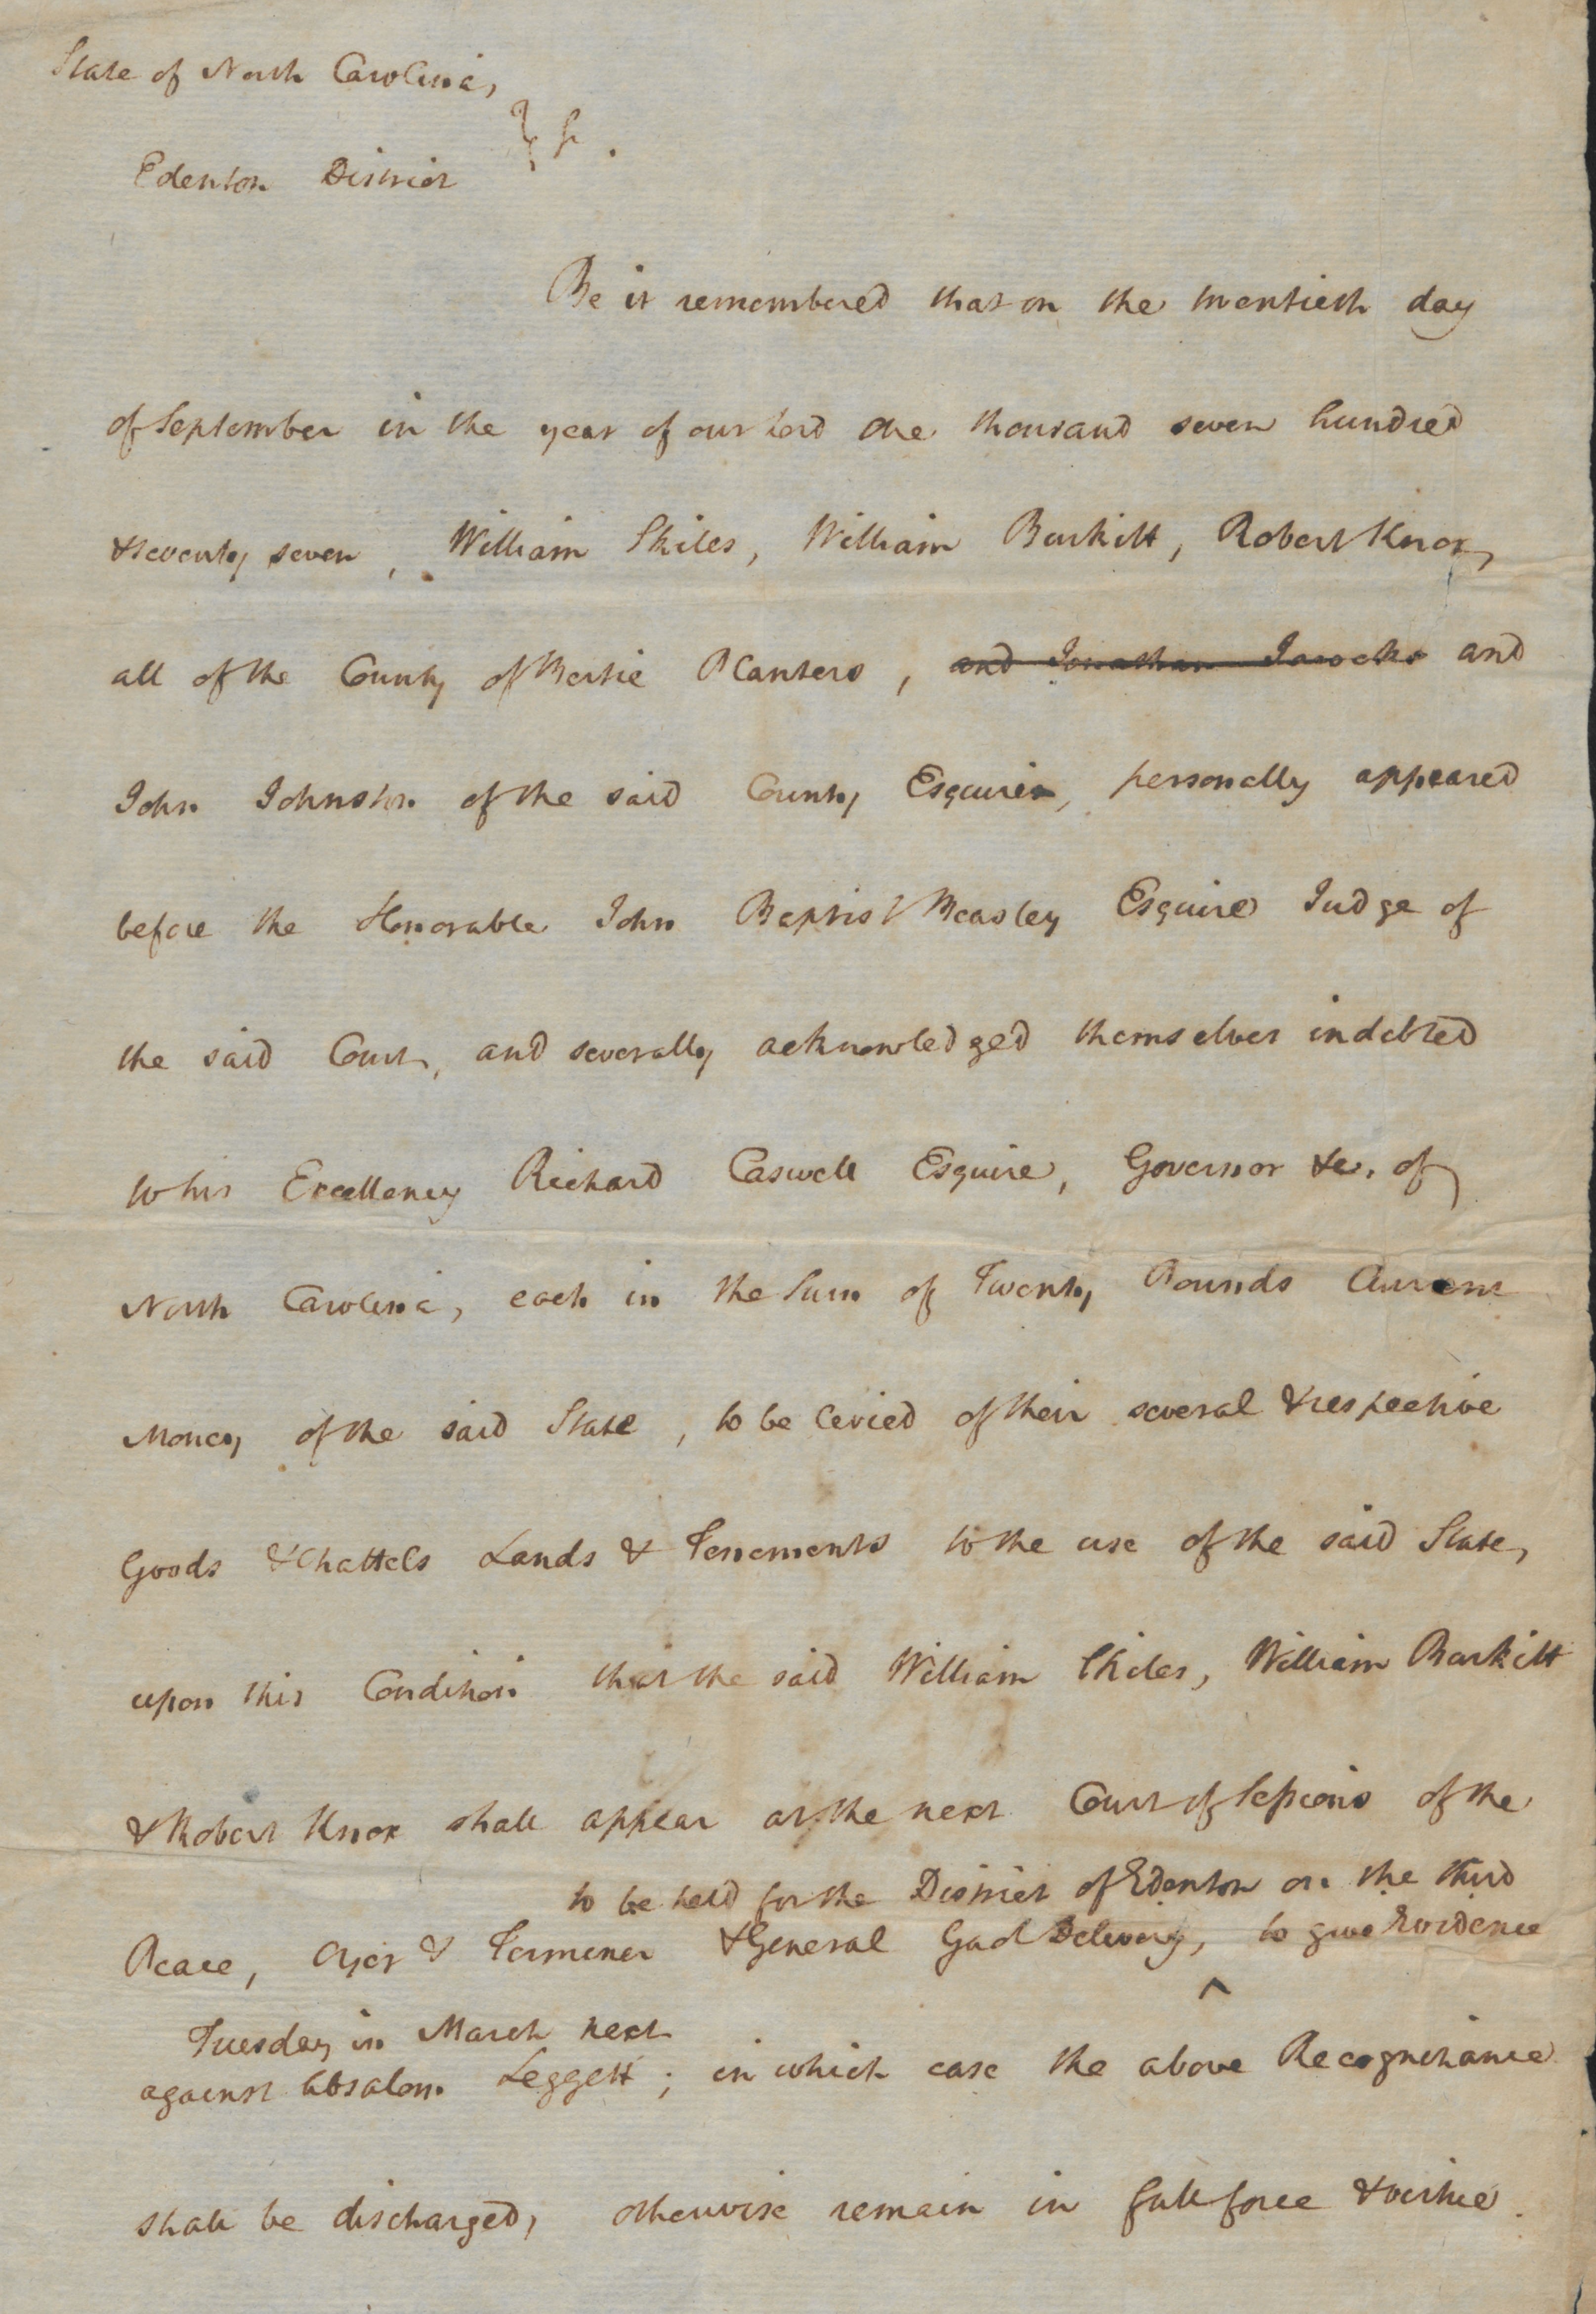 Bond by John Baptist Beasley for William Skyles, William Burket, and Robert Knox, 20 September 1777, page 1